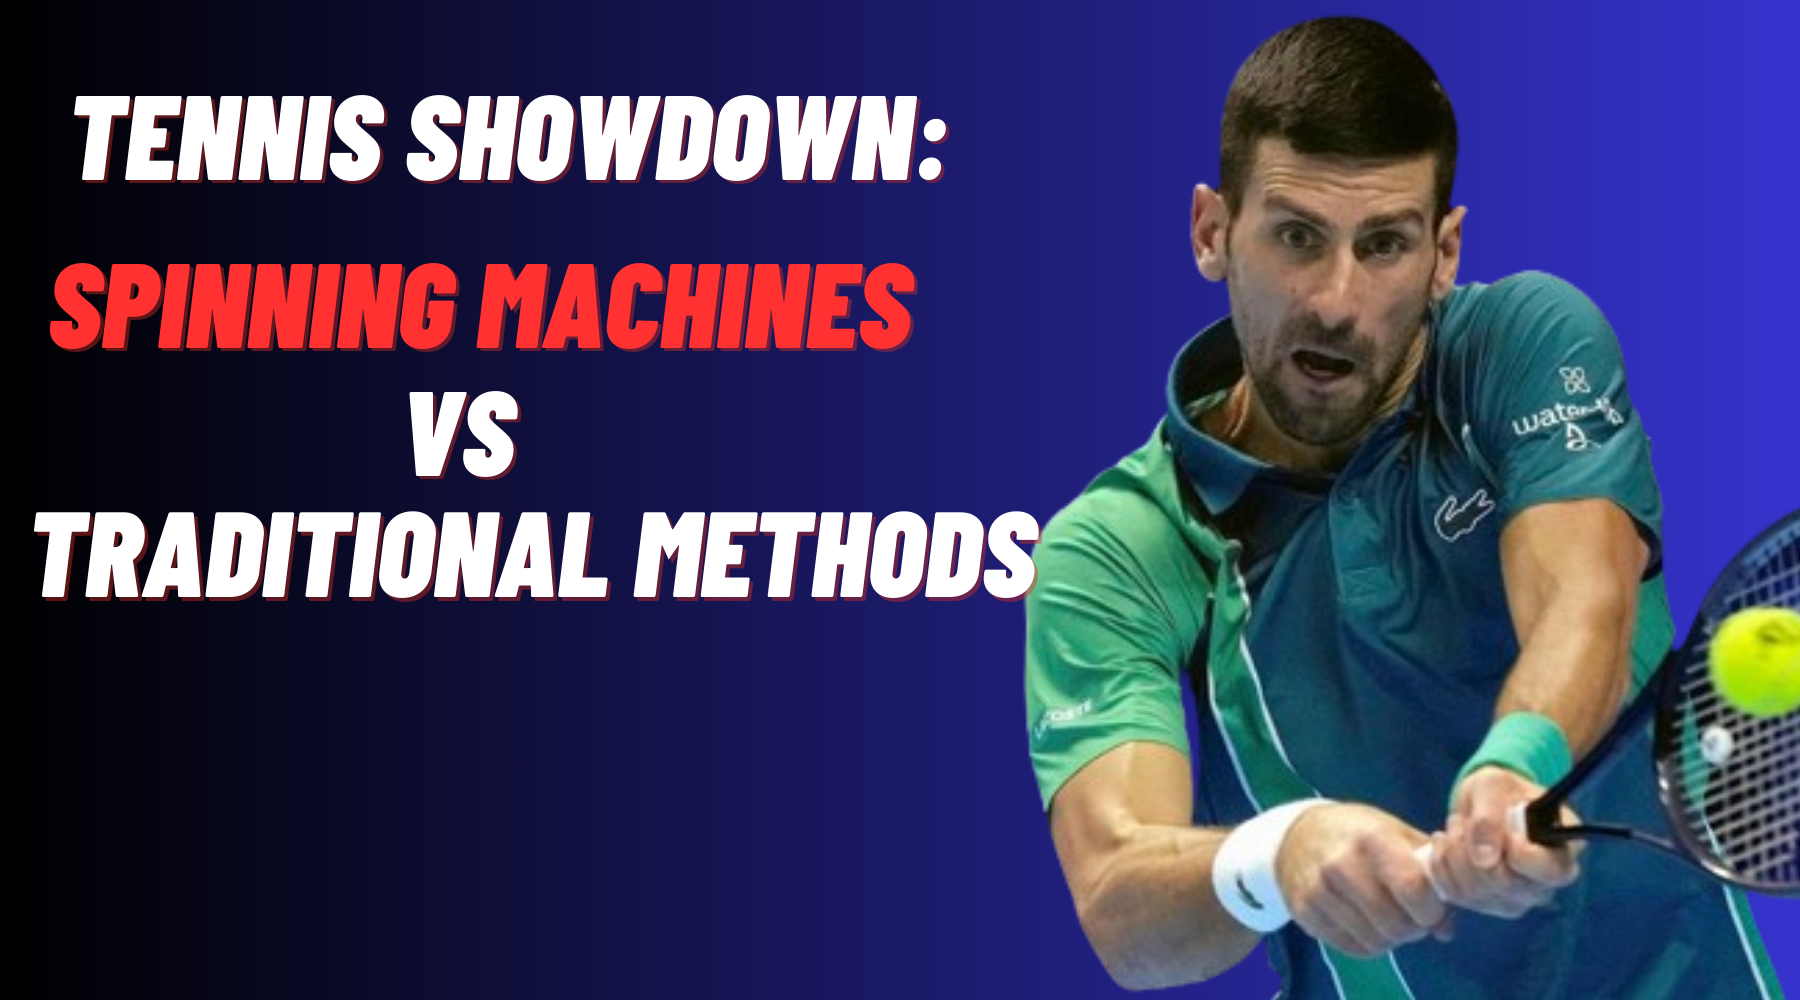 Tennis Showdown: Spinning Machines vs. Traditional Methods